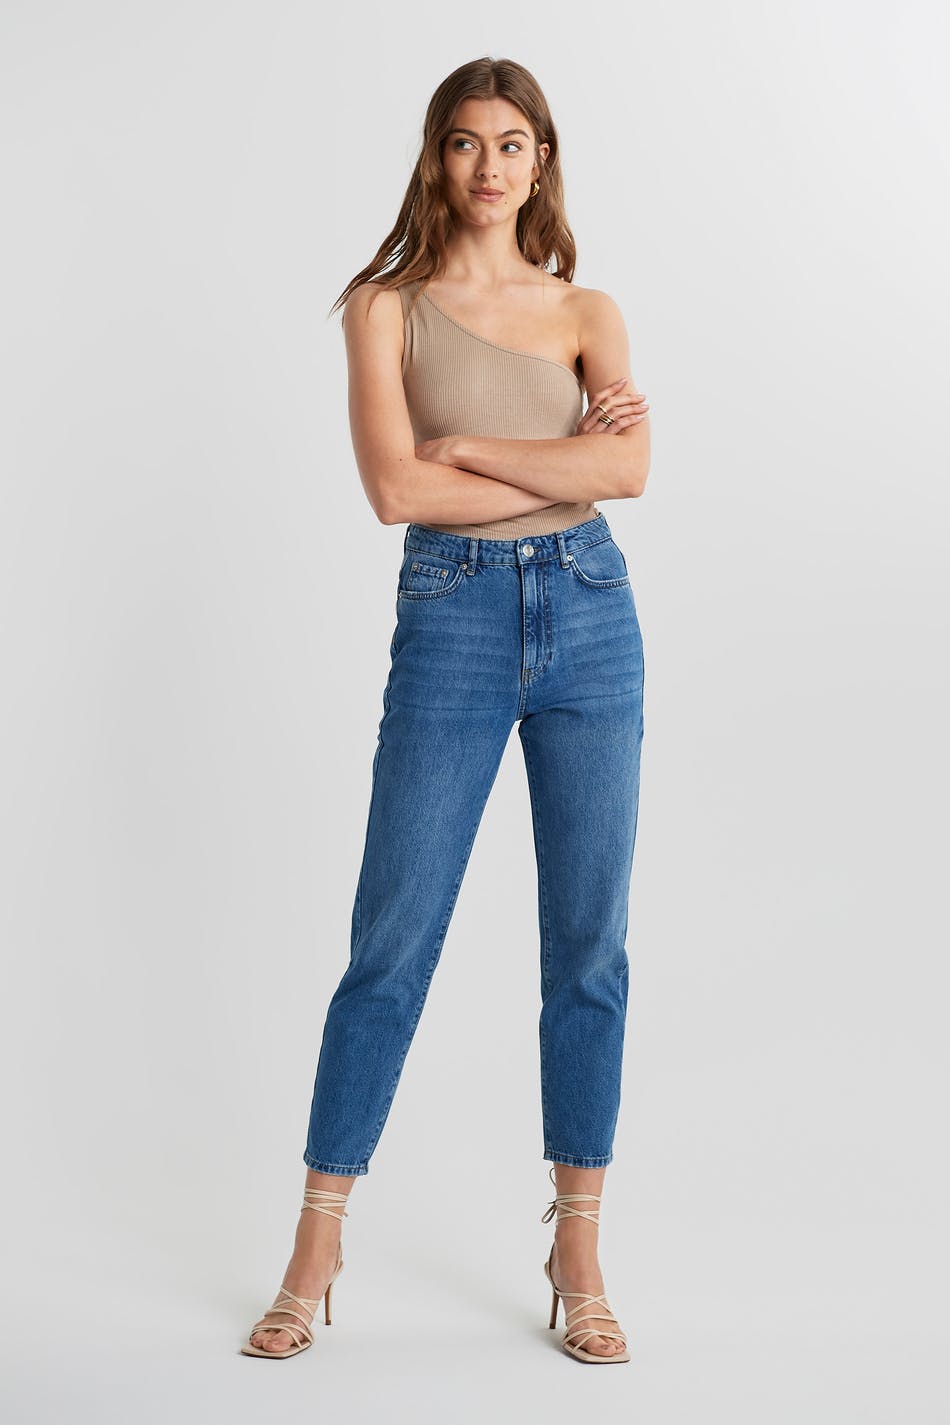 kalligraf Dæmon Indflydelsesrig Mom jeans - Trendy jeans modeller mom - Gina Tricot